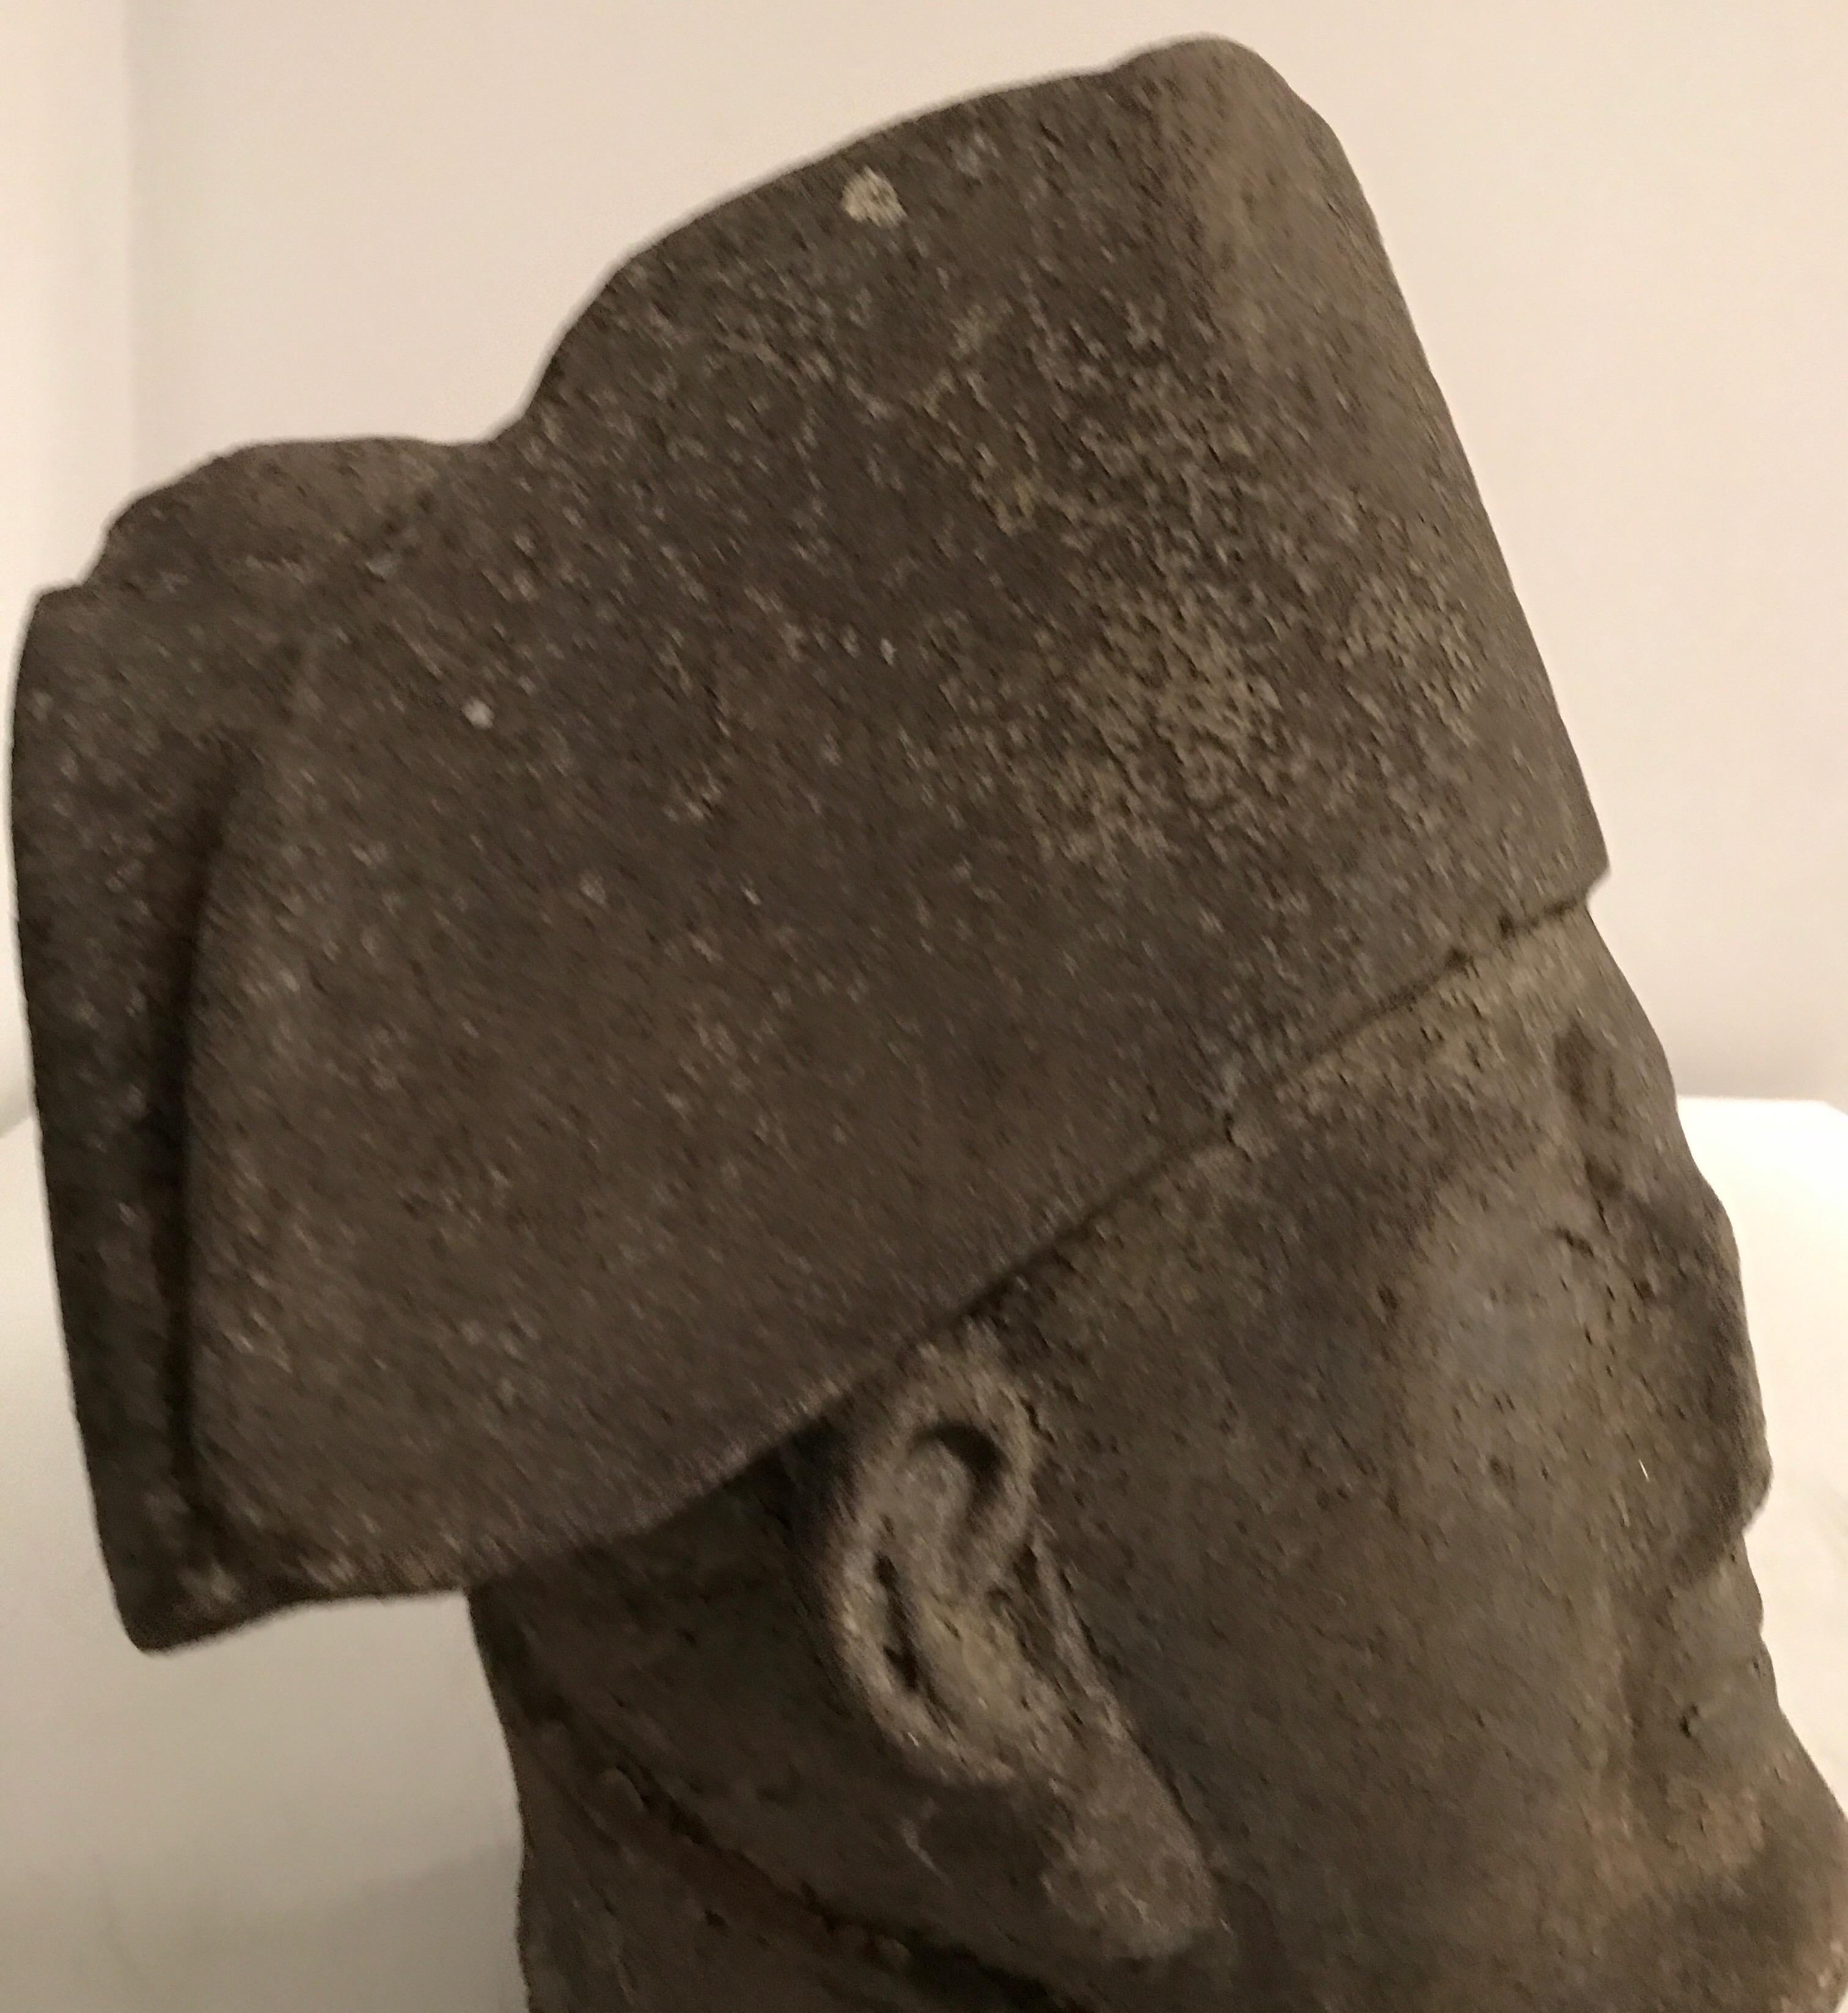 Scottish Stone Bust of a Gentleman 5